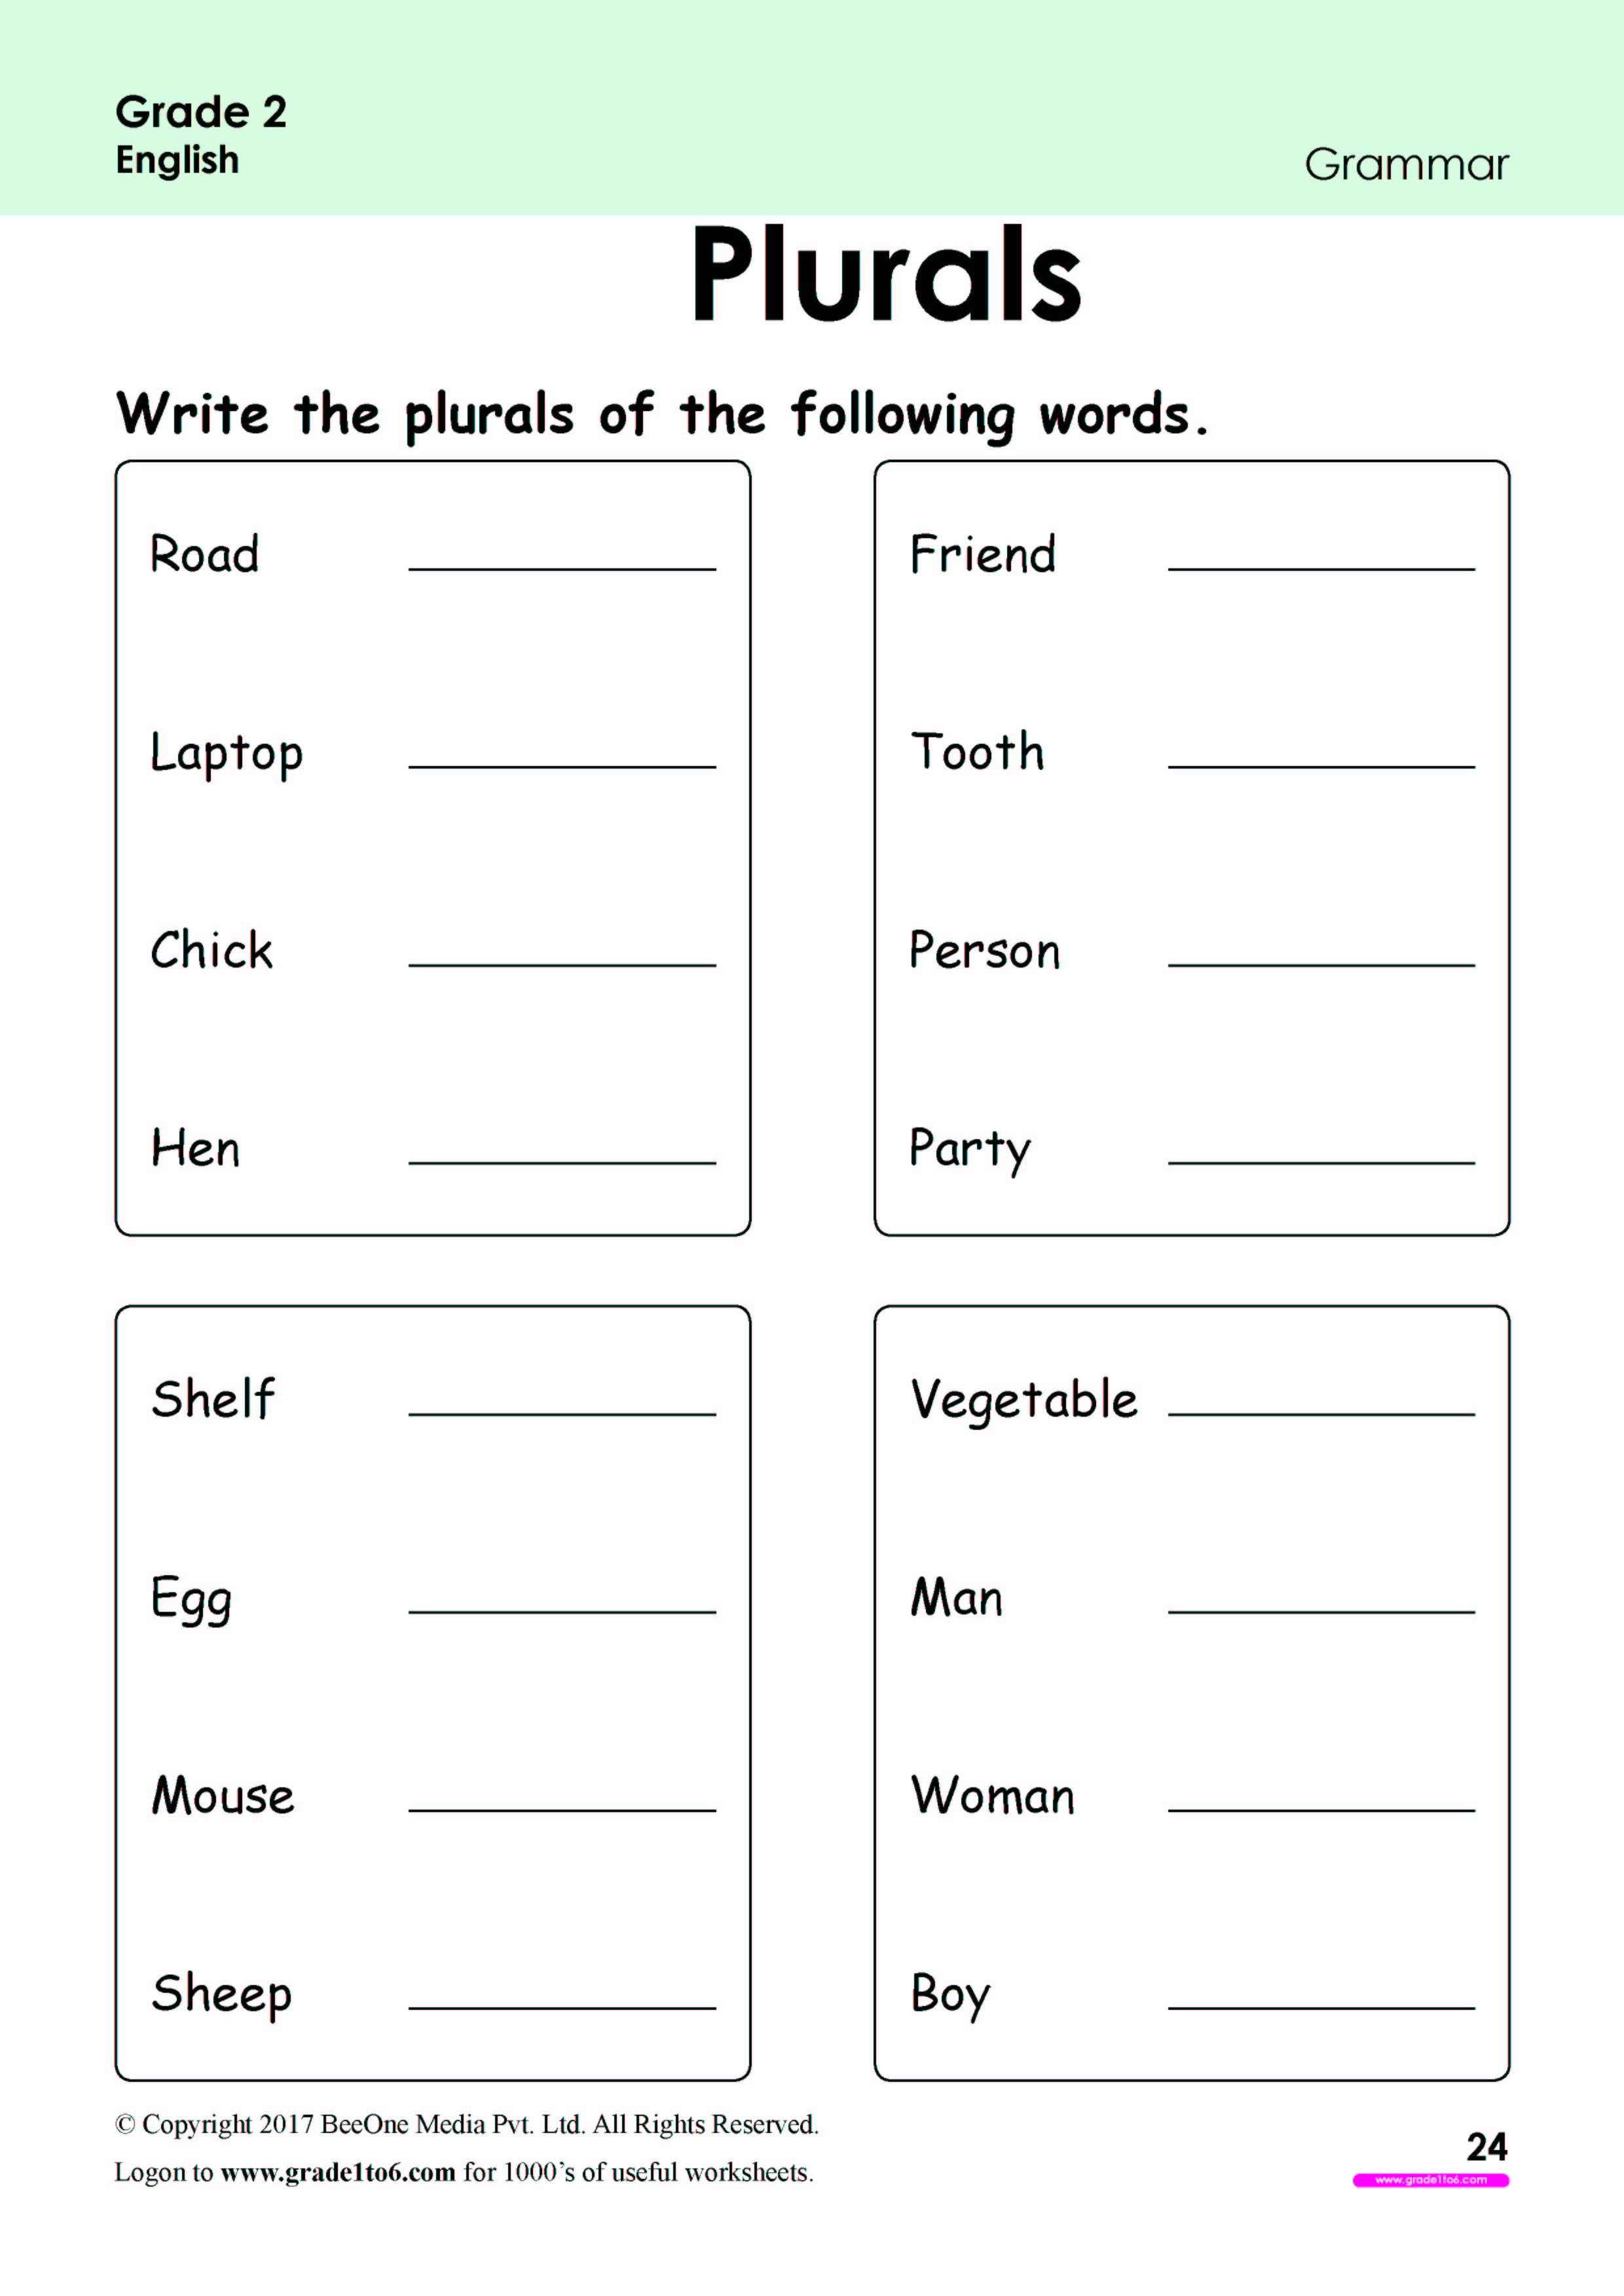 singular-or-plural-nouns-worksheets-k5-learning-plural-nouns